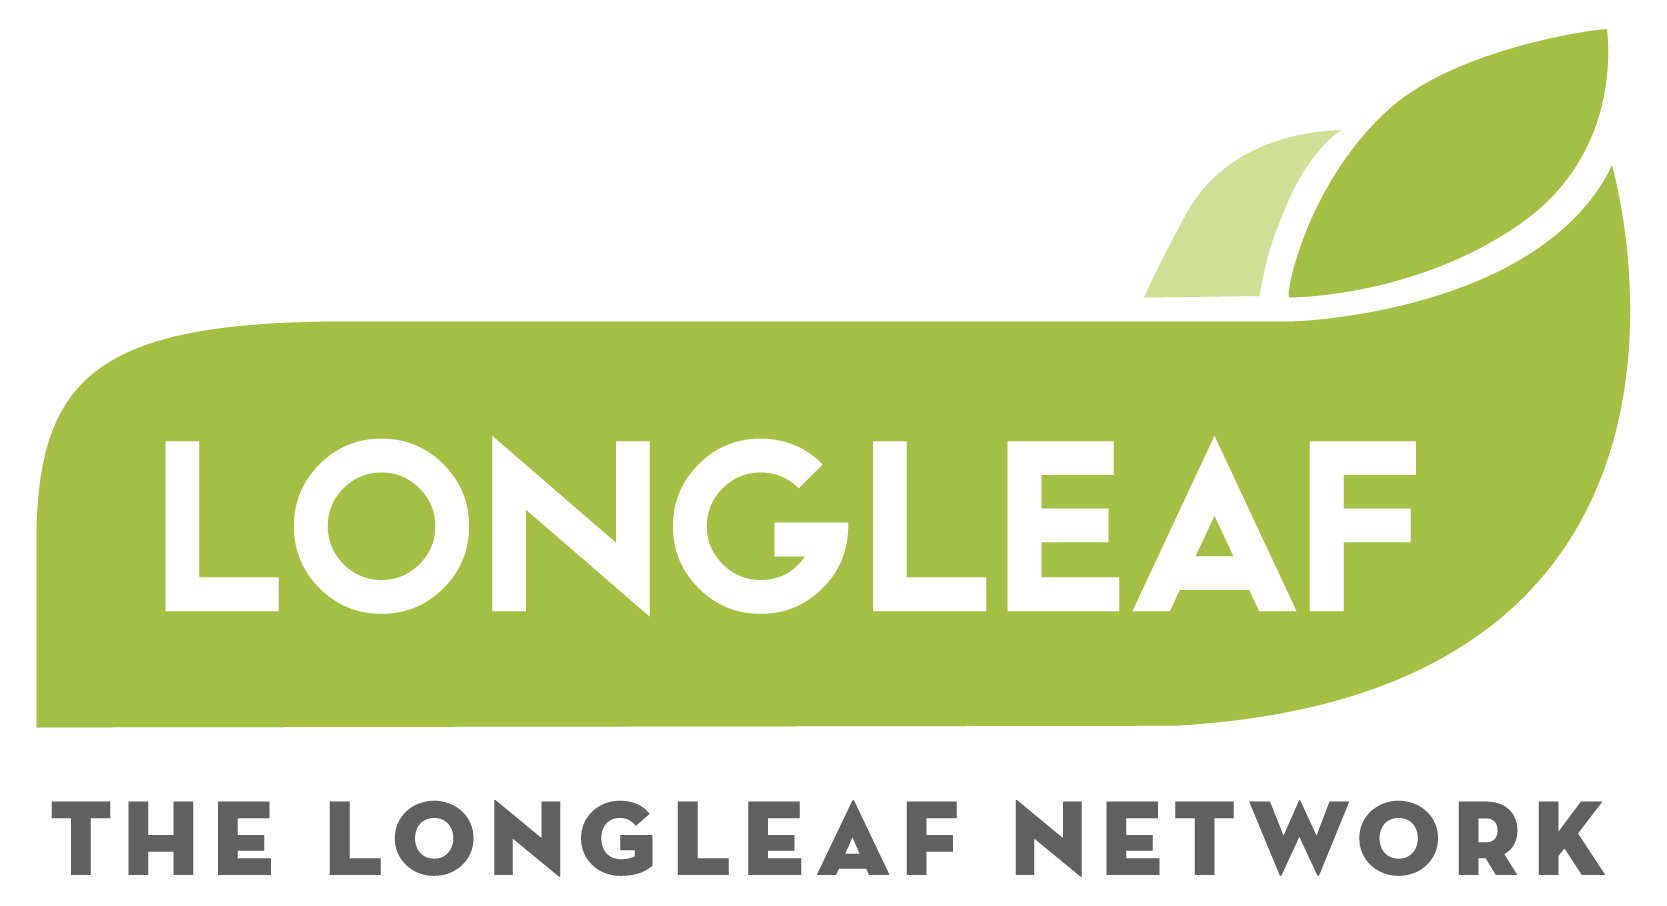 The Longleaf Network